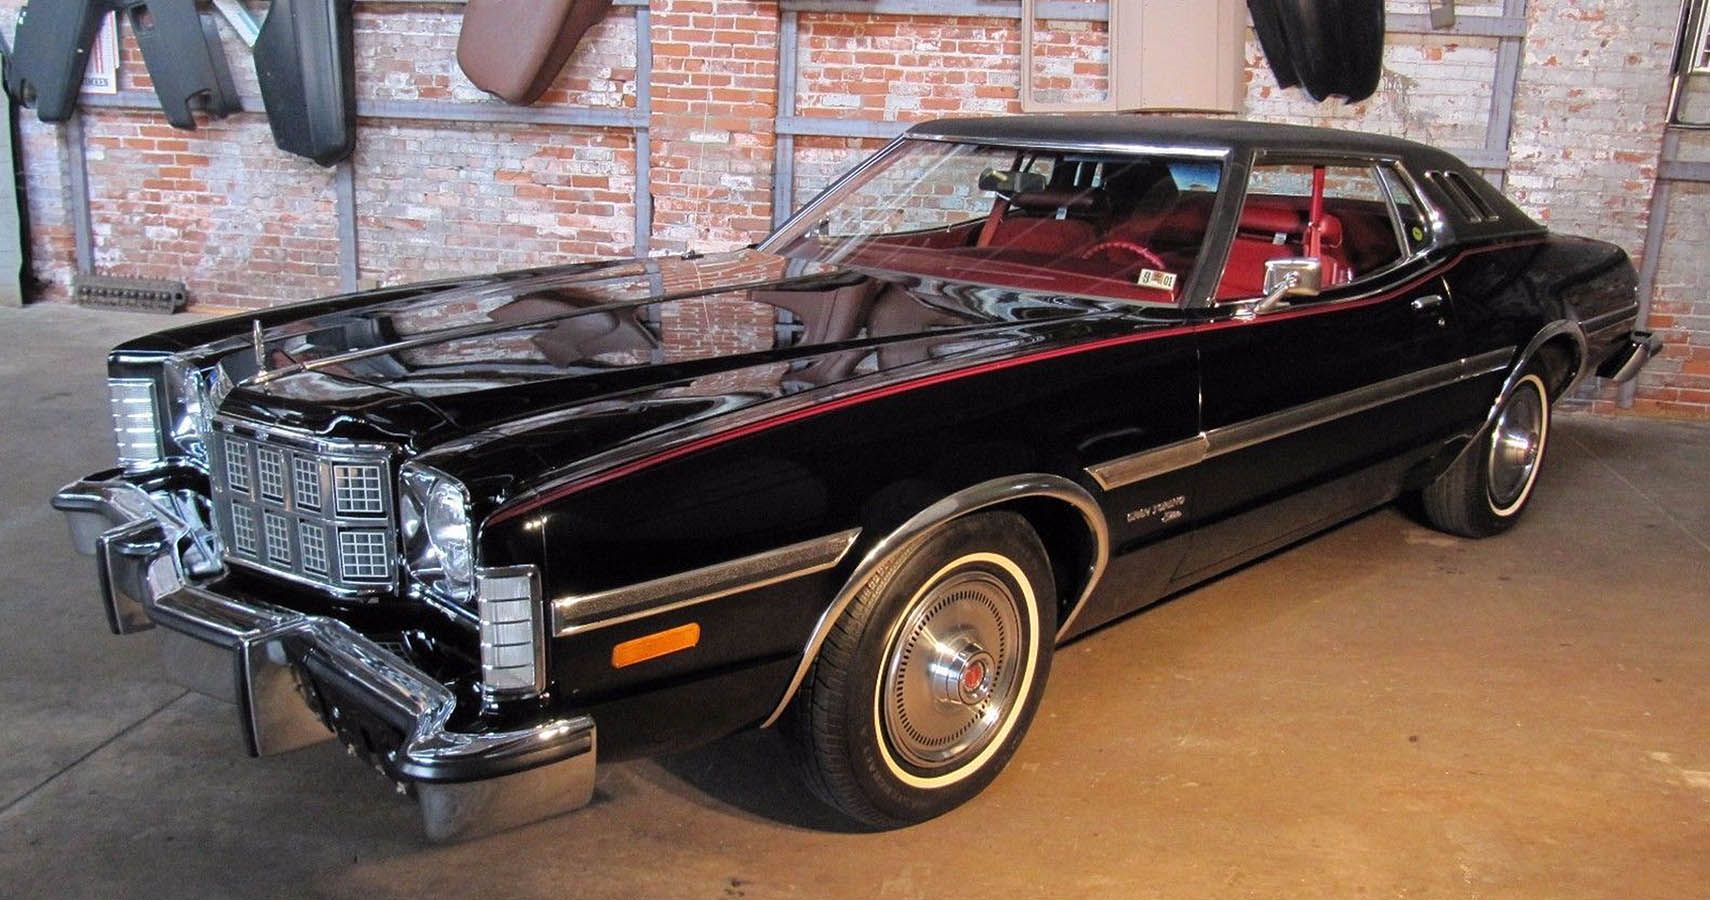 1974-1976 Ford Torino: Big Car But Malaise-Stricken